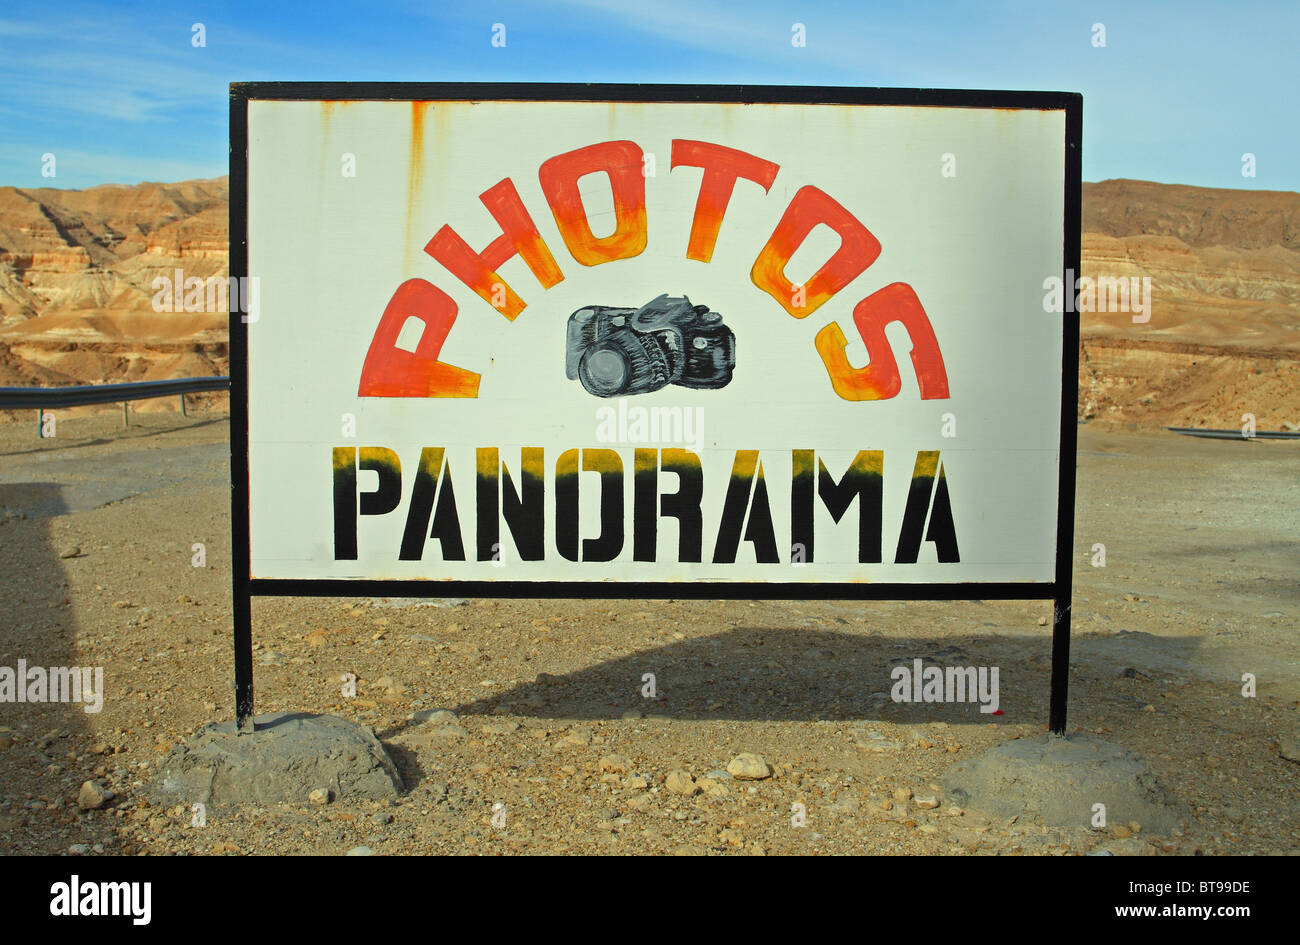 'Photos panorama' sign, near Tamerza, Sahara Desert, Atlas Mountains, Western Tunisia Stock Photo